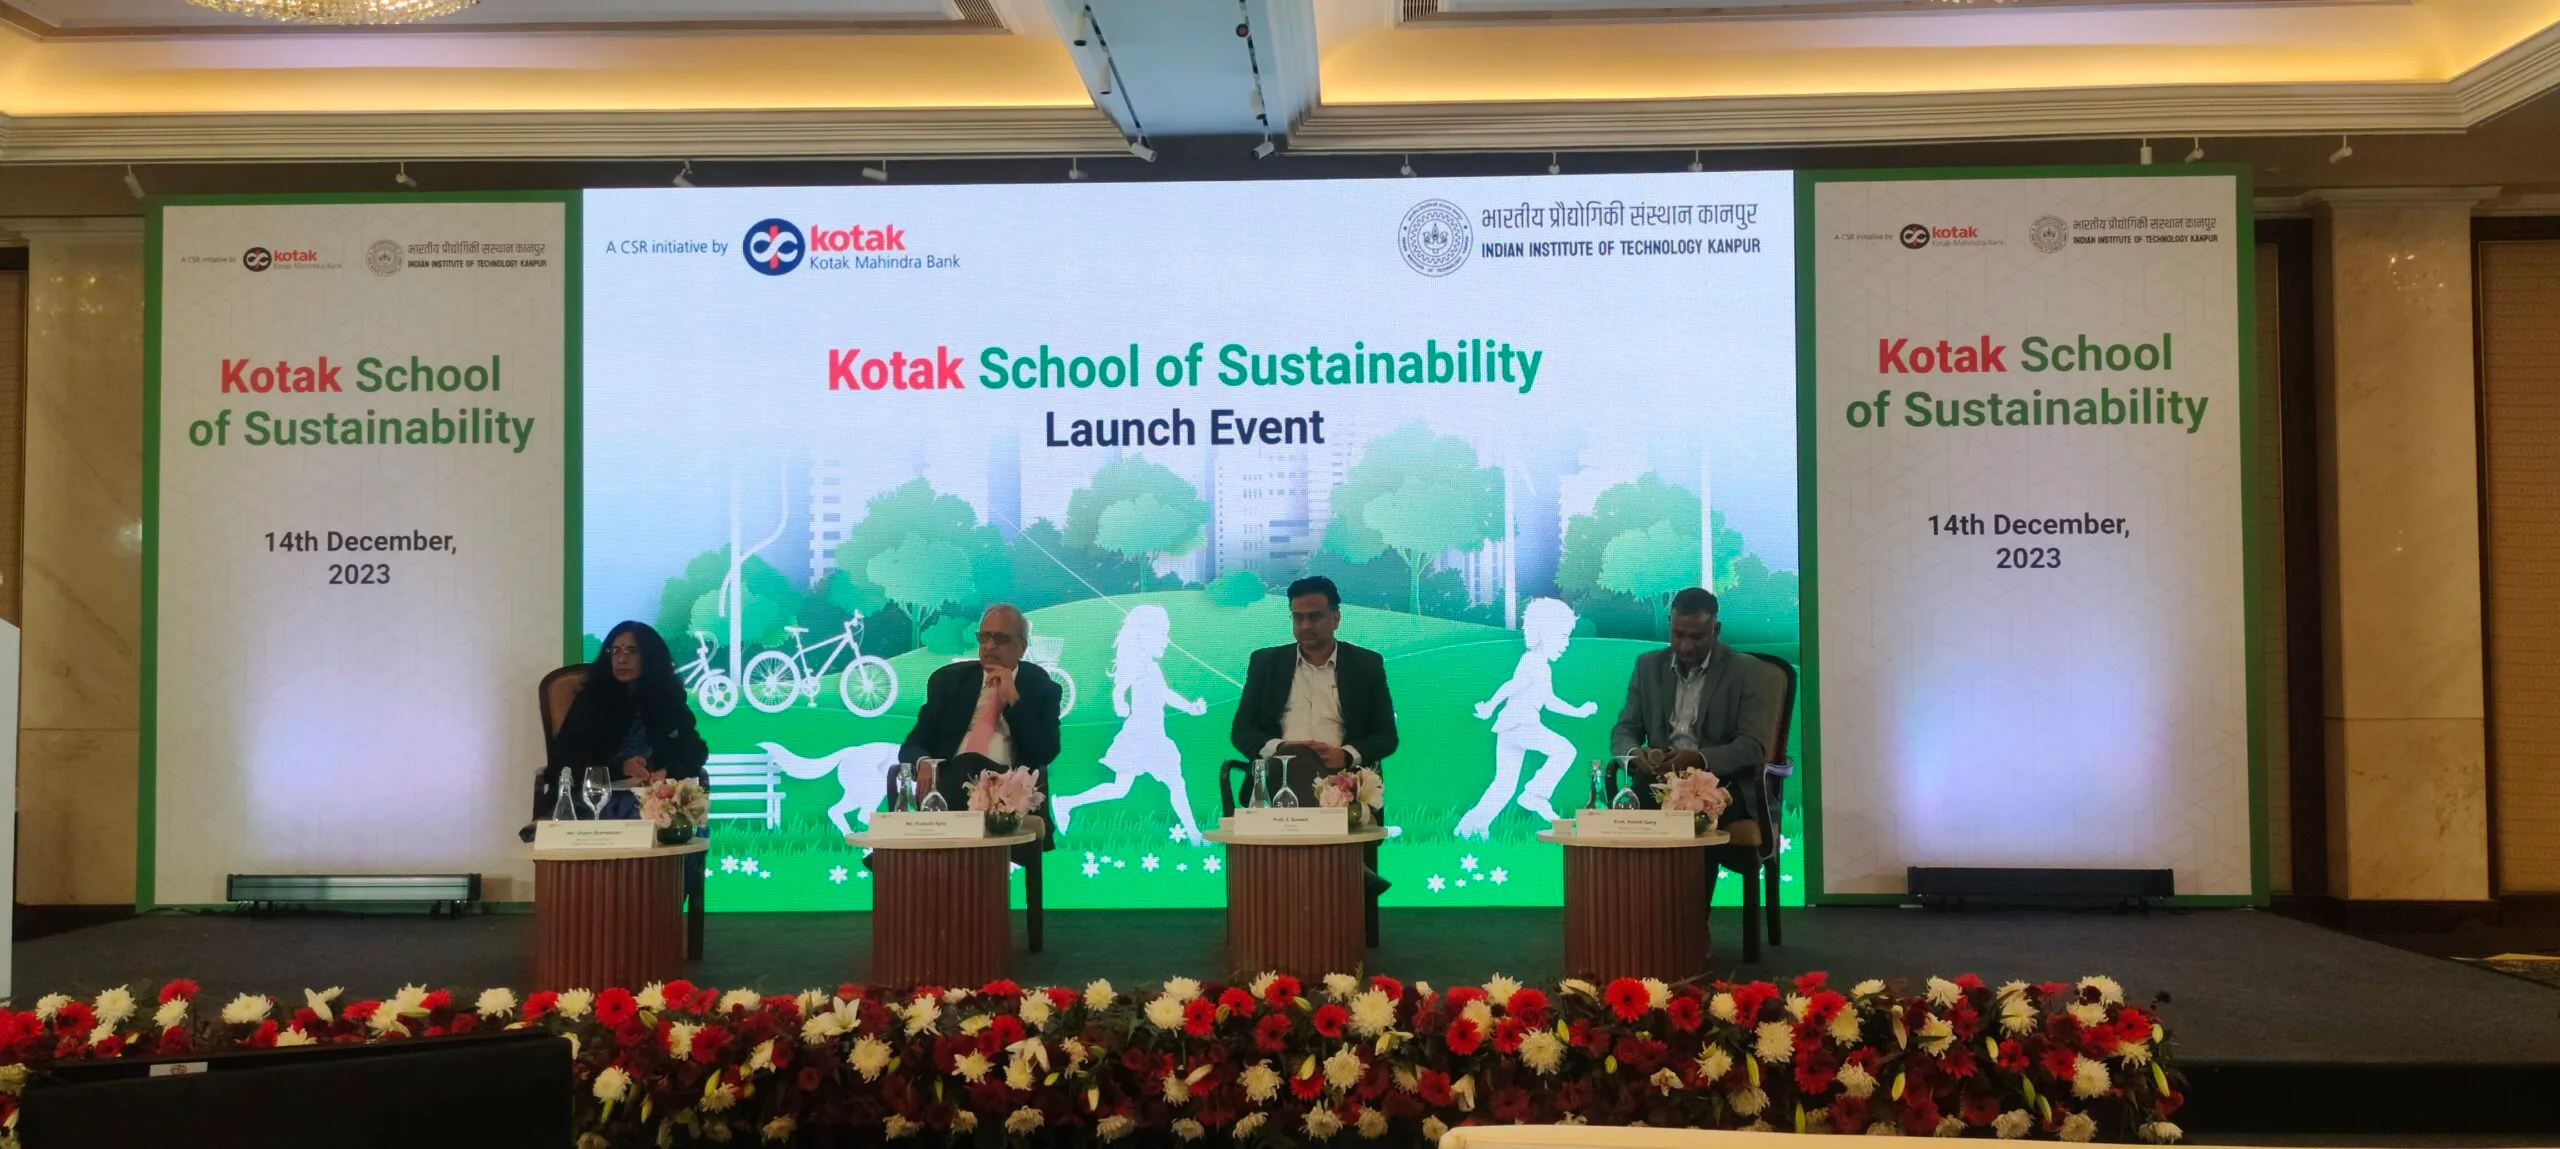 Kotak Mahindra Bank partners with IITK to launch the Kotak School of Sustainability through its CSR Program